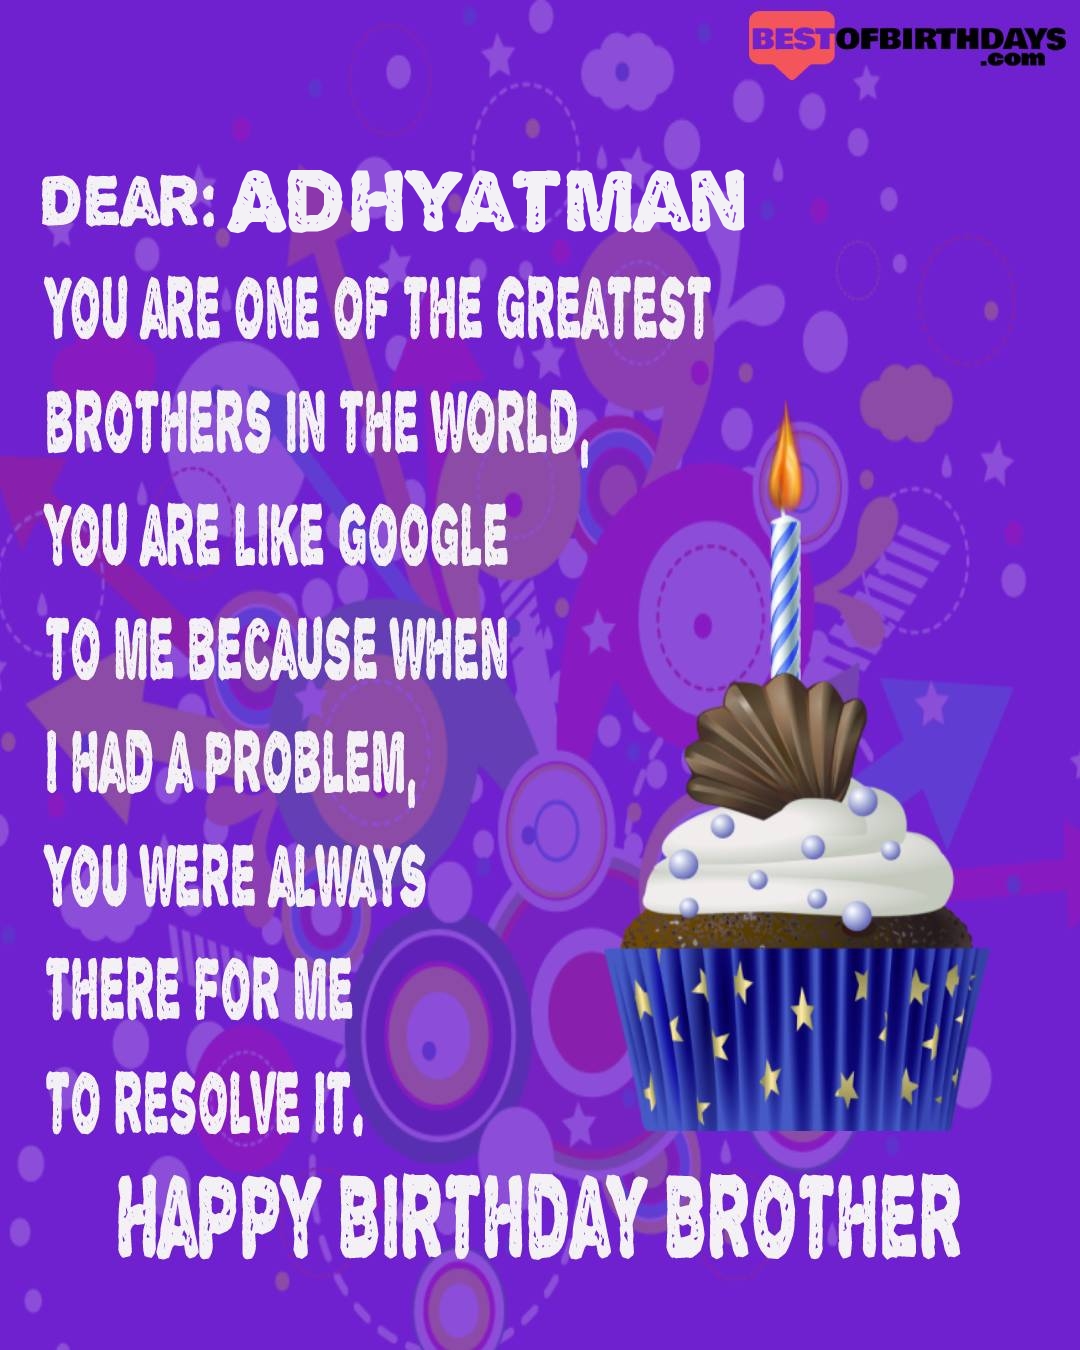 Happy birthday adhyatman bhai brother bro